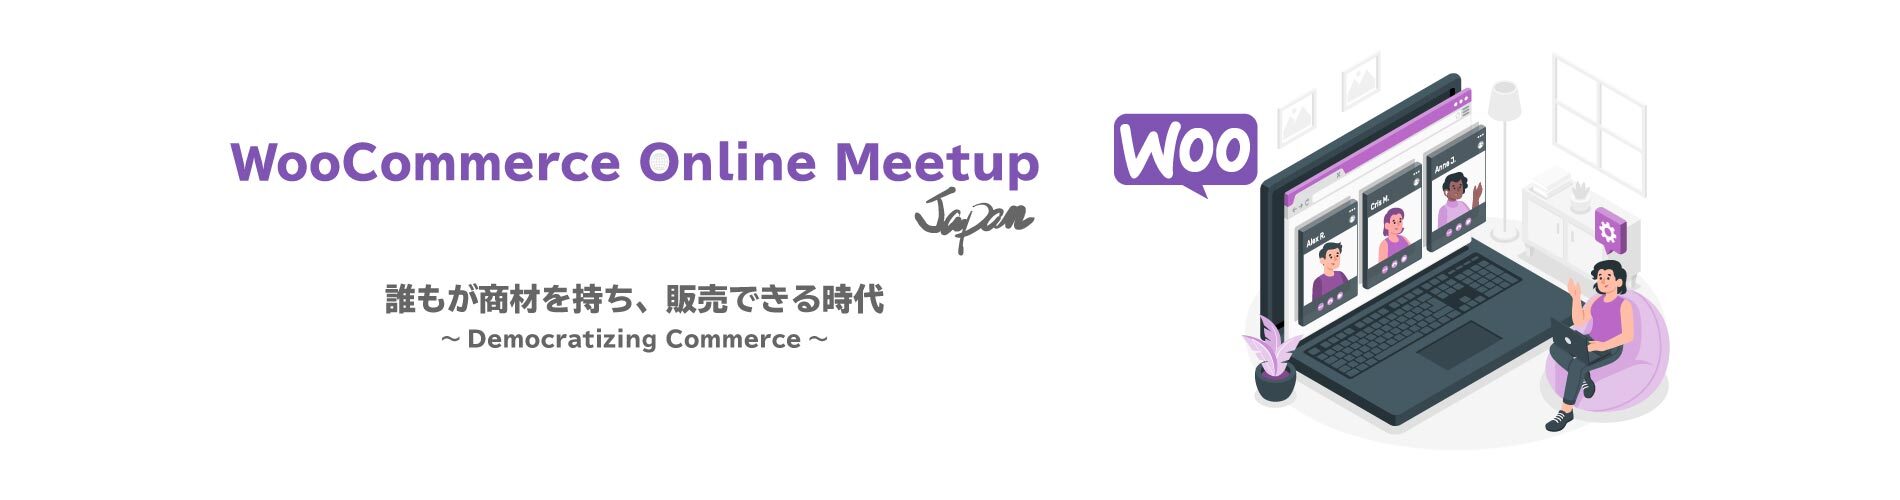 WooCommerce Online Meetup